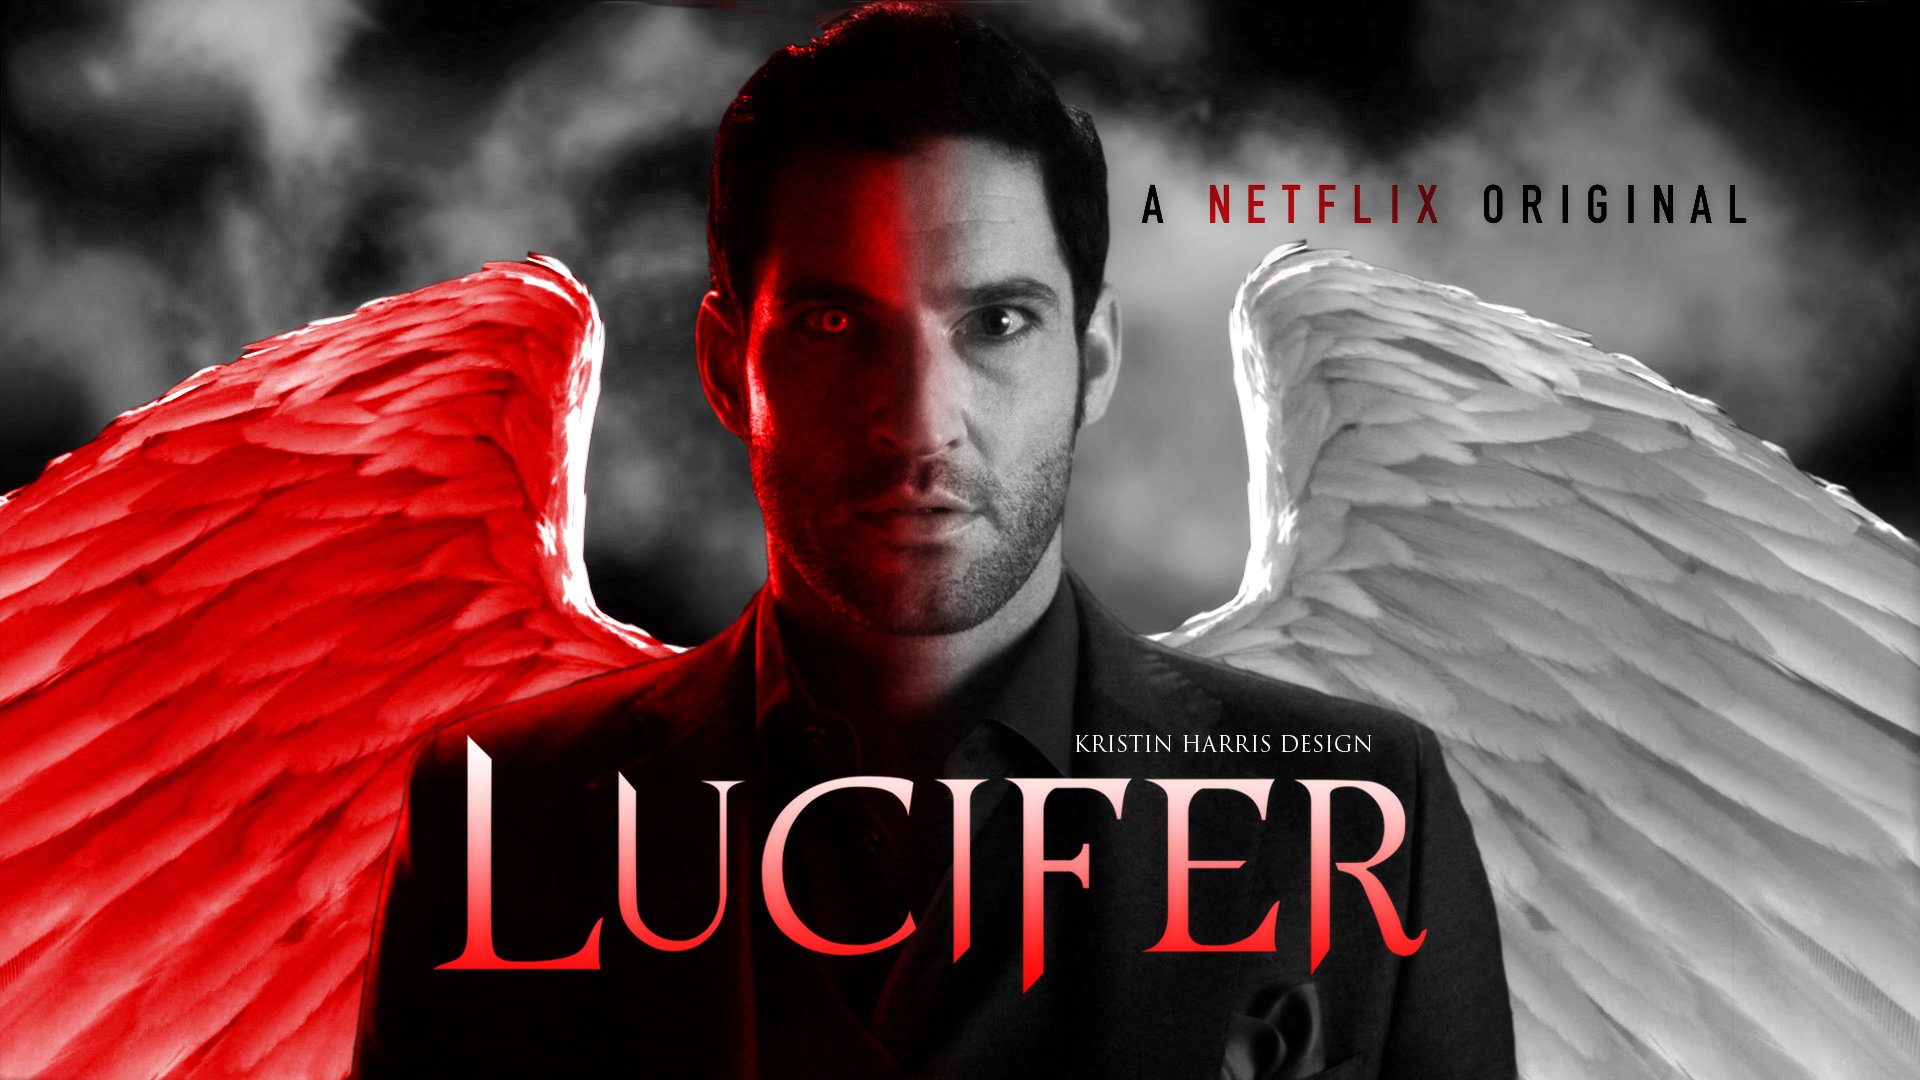 Lucifer Season 4 With Wings - 1920x1080 Wallpaper - teahub.io